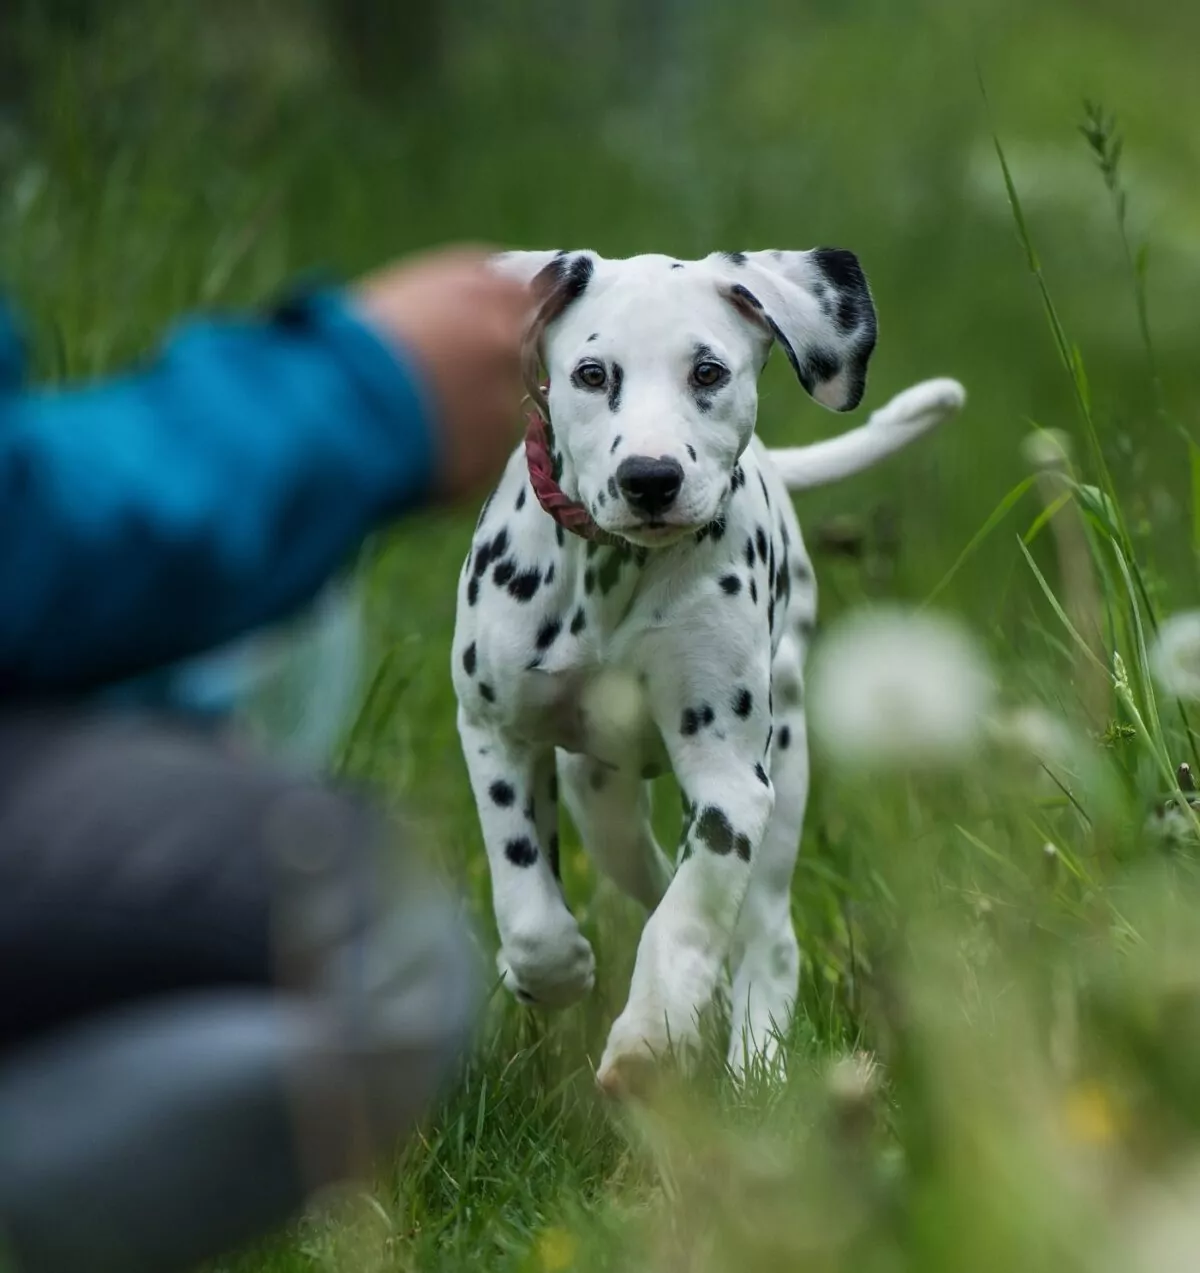 Dalmatian puppy in dog training running towards their owner